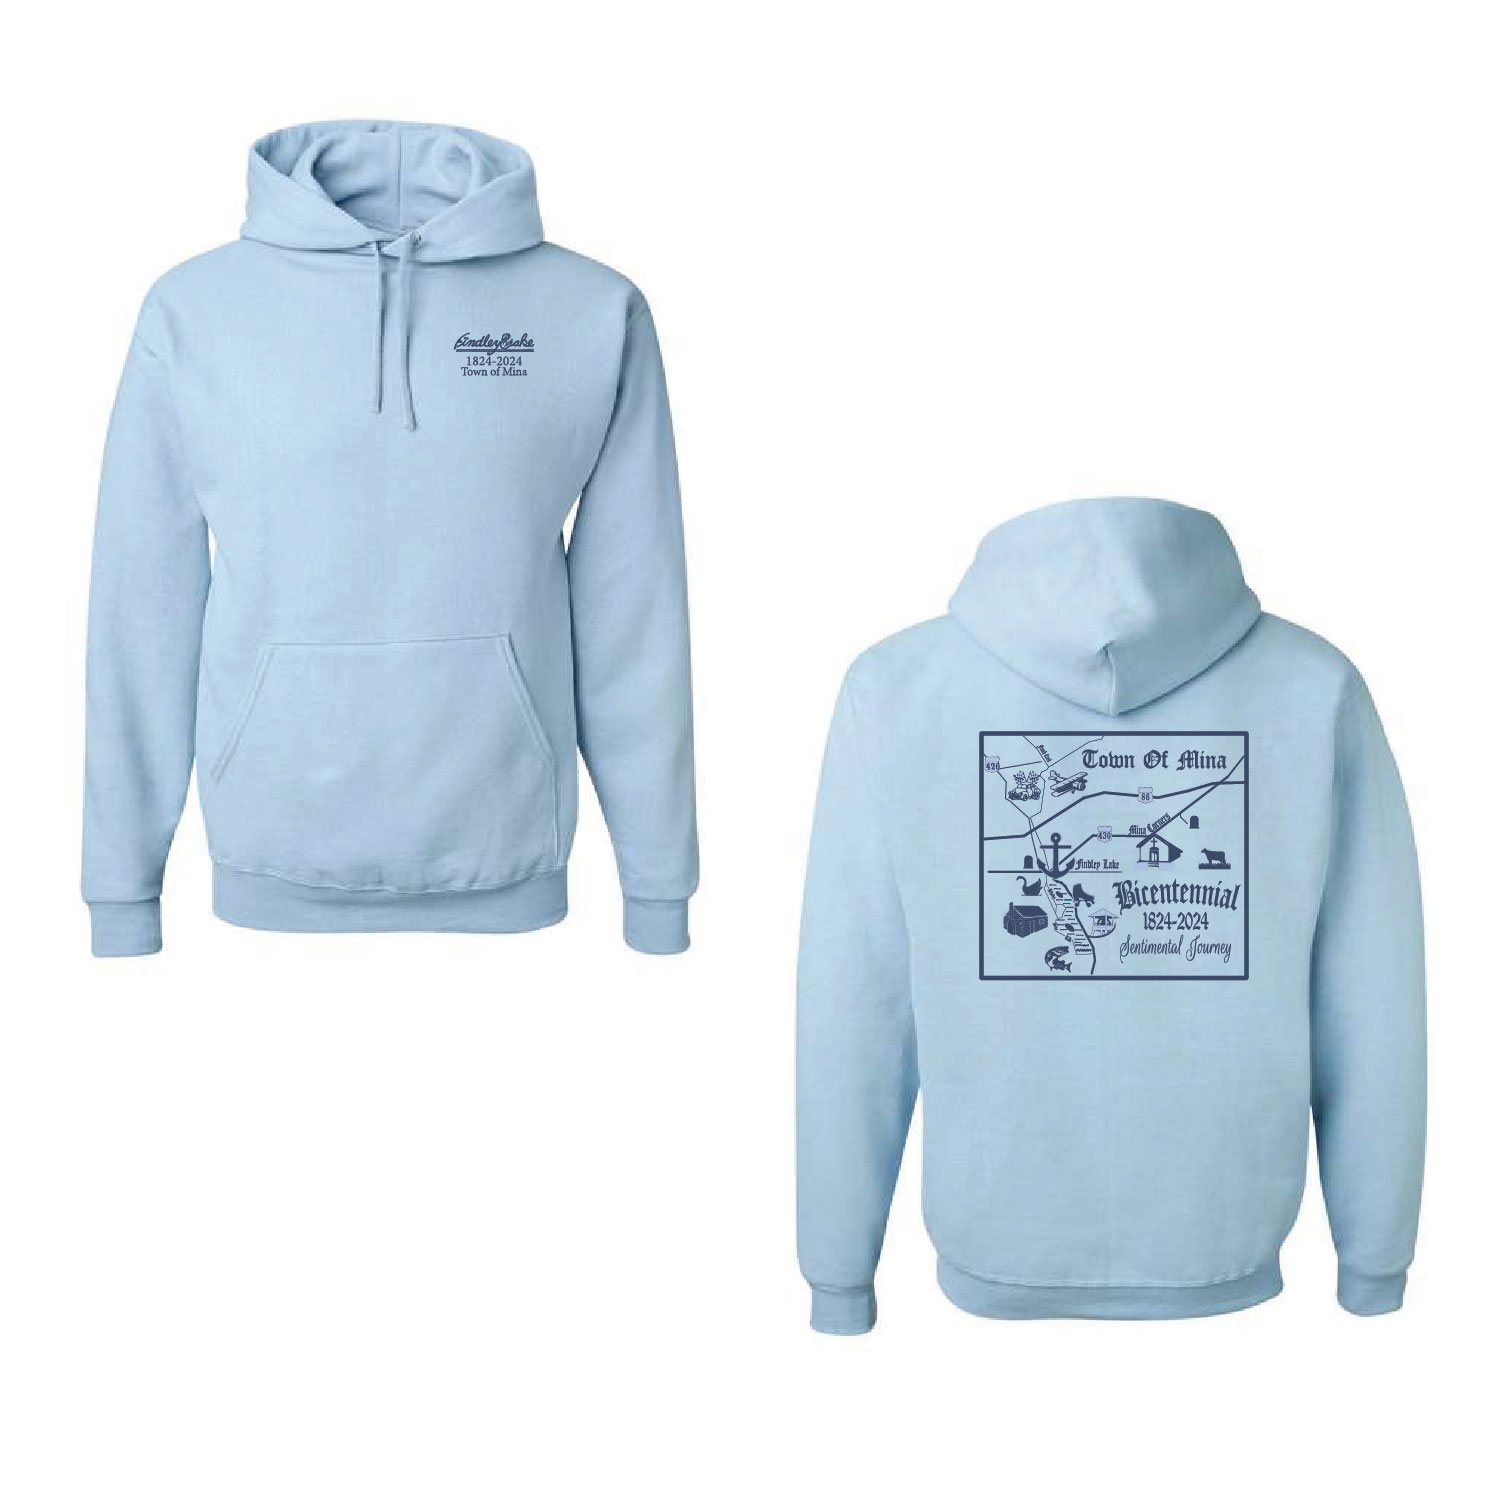 Town of Mina Bicentennial – Cotton Hooded Sweatshirt product image